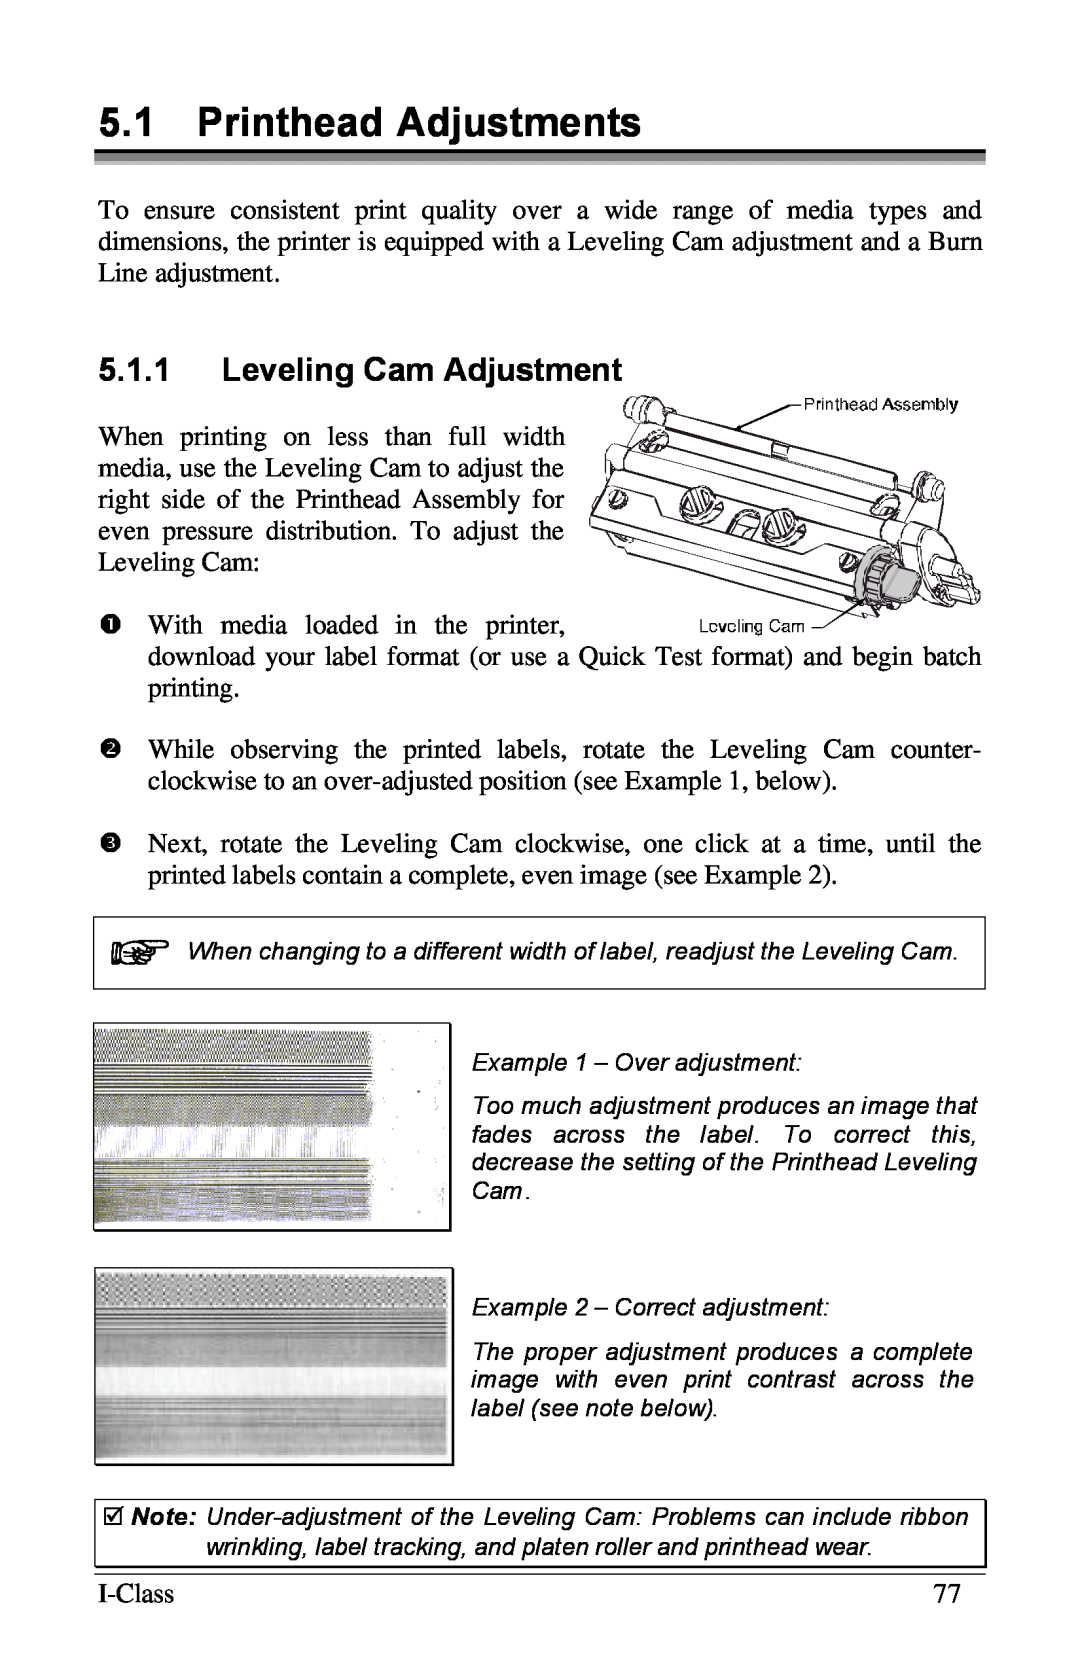 Xerox I Class manual 5.1Printhead Adjustments, 5.1.1Leveling Cam Adjustment 